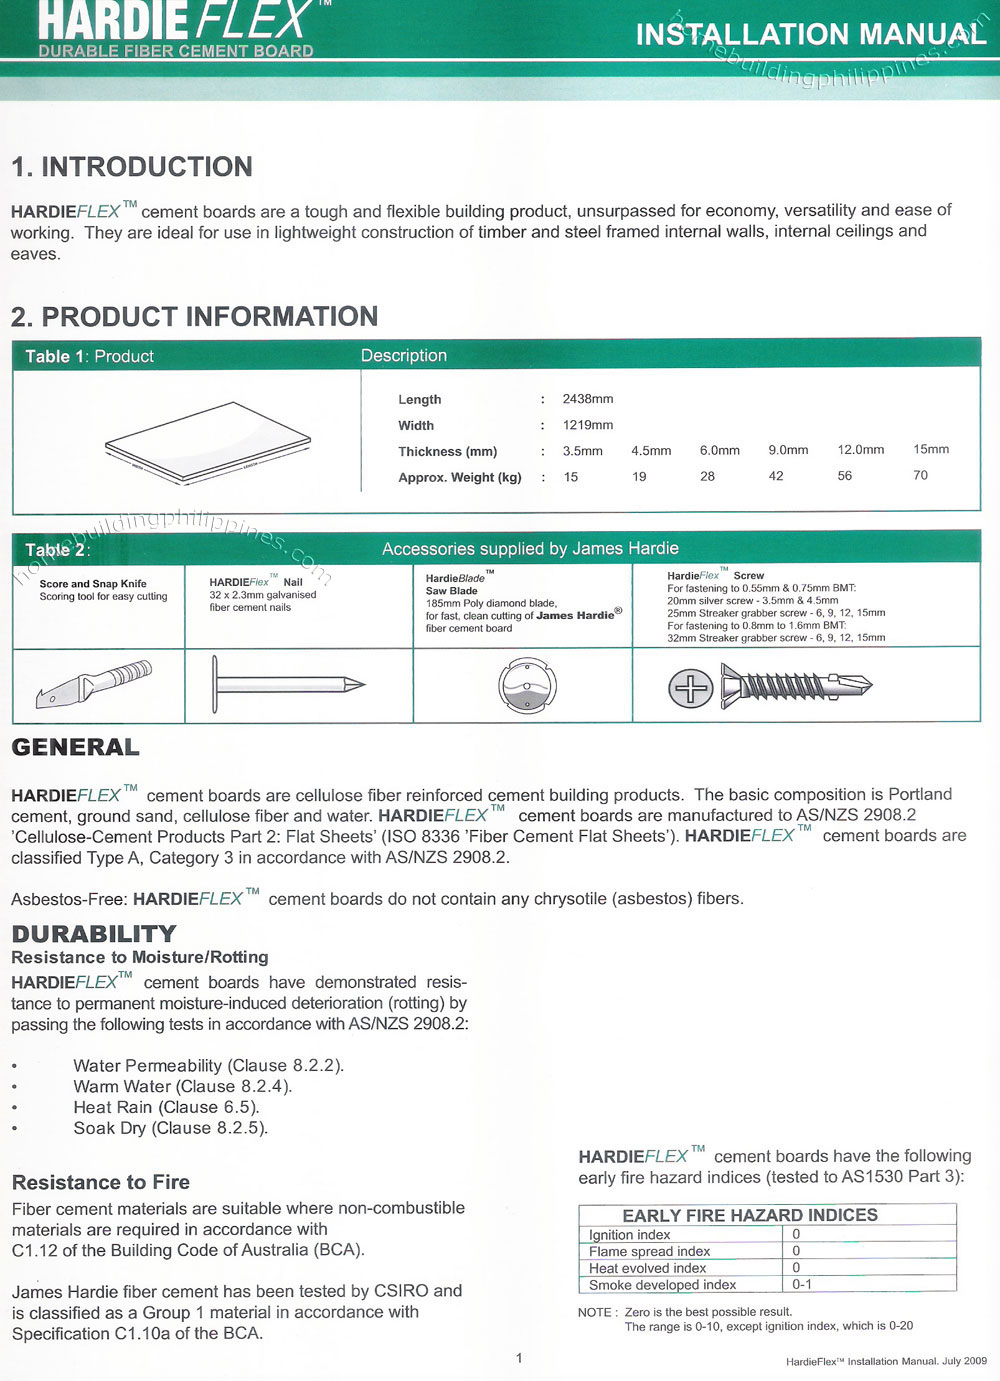 HardieFlex Durable Fiber Cement Board Installation Manual